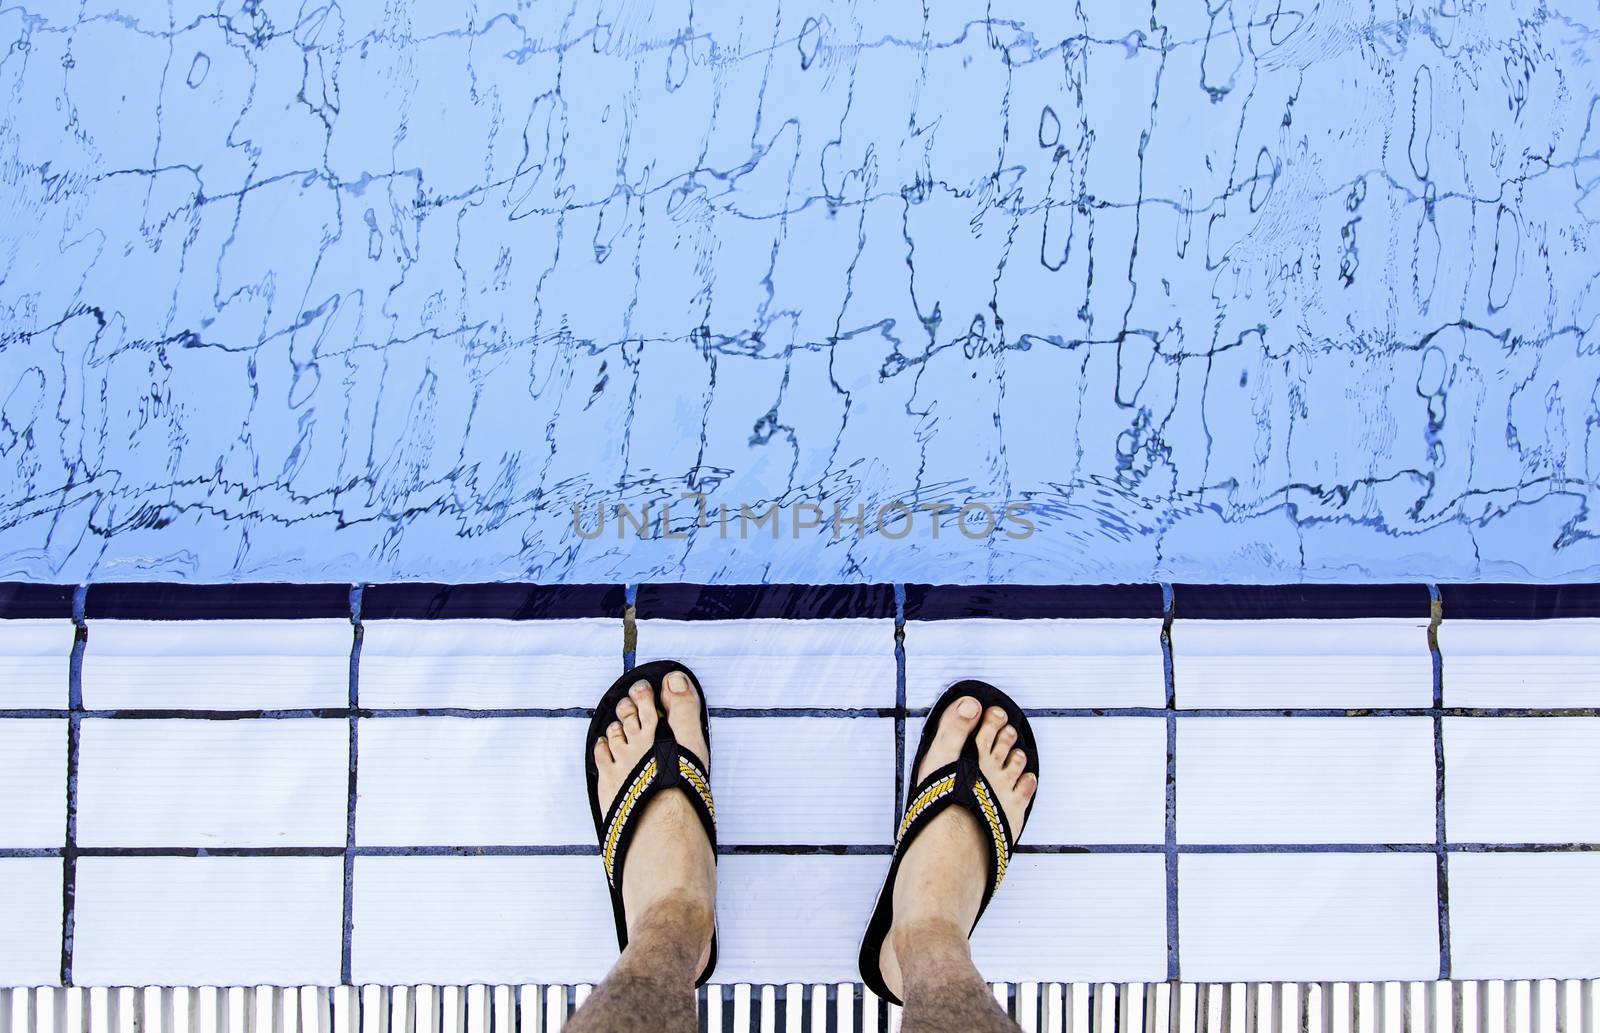 Man feet in the pool water by esebene